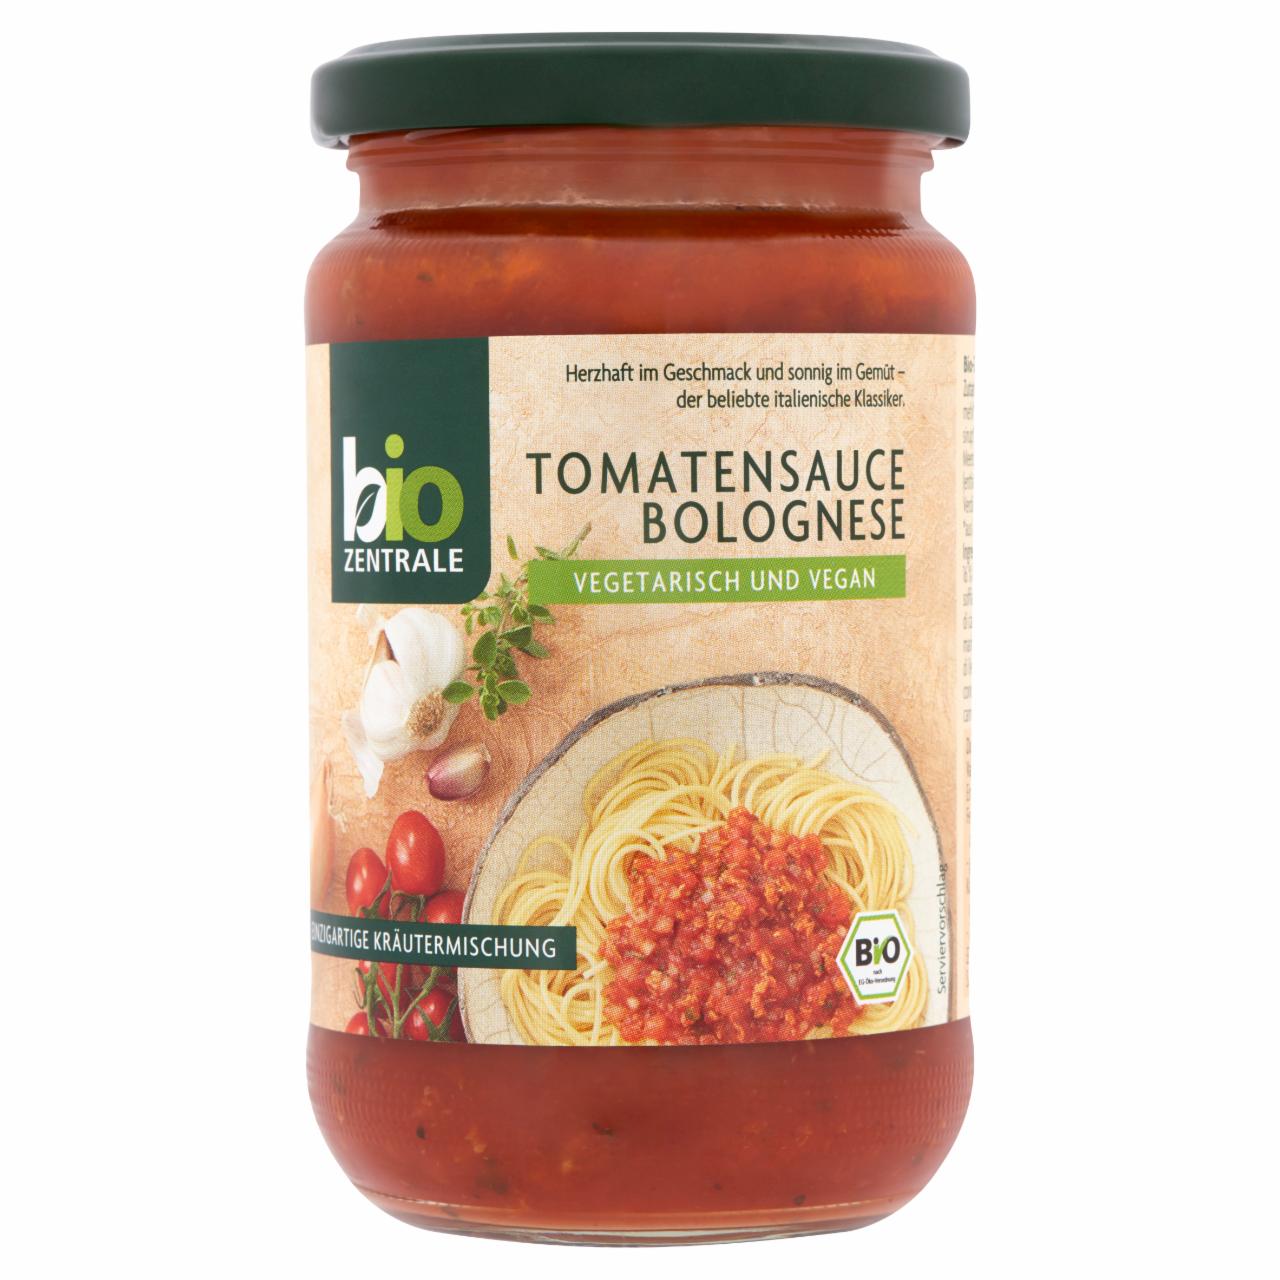 Photo - Bio Zentrale Organic Bologna Tomato Sauce 350 g